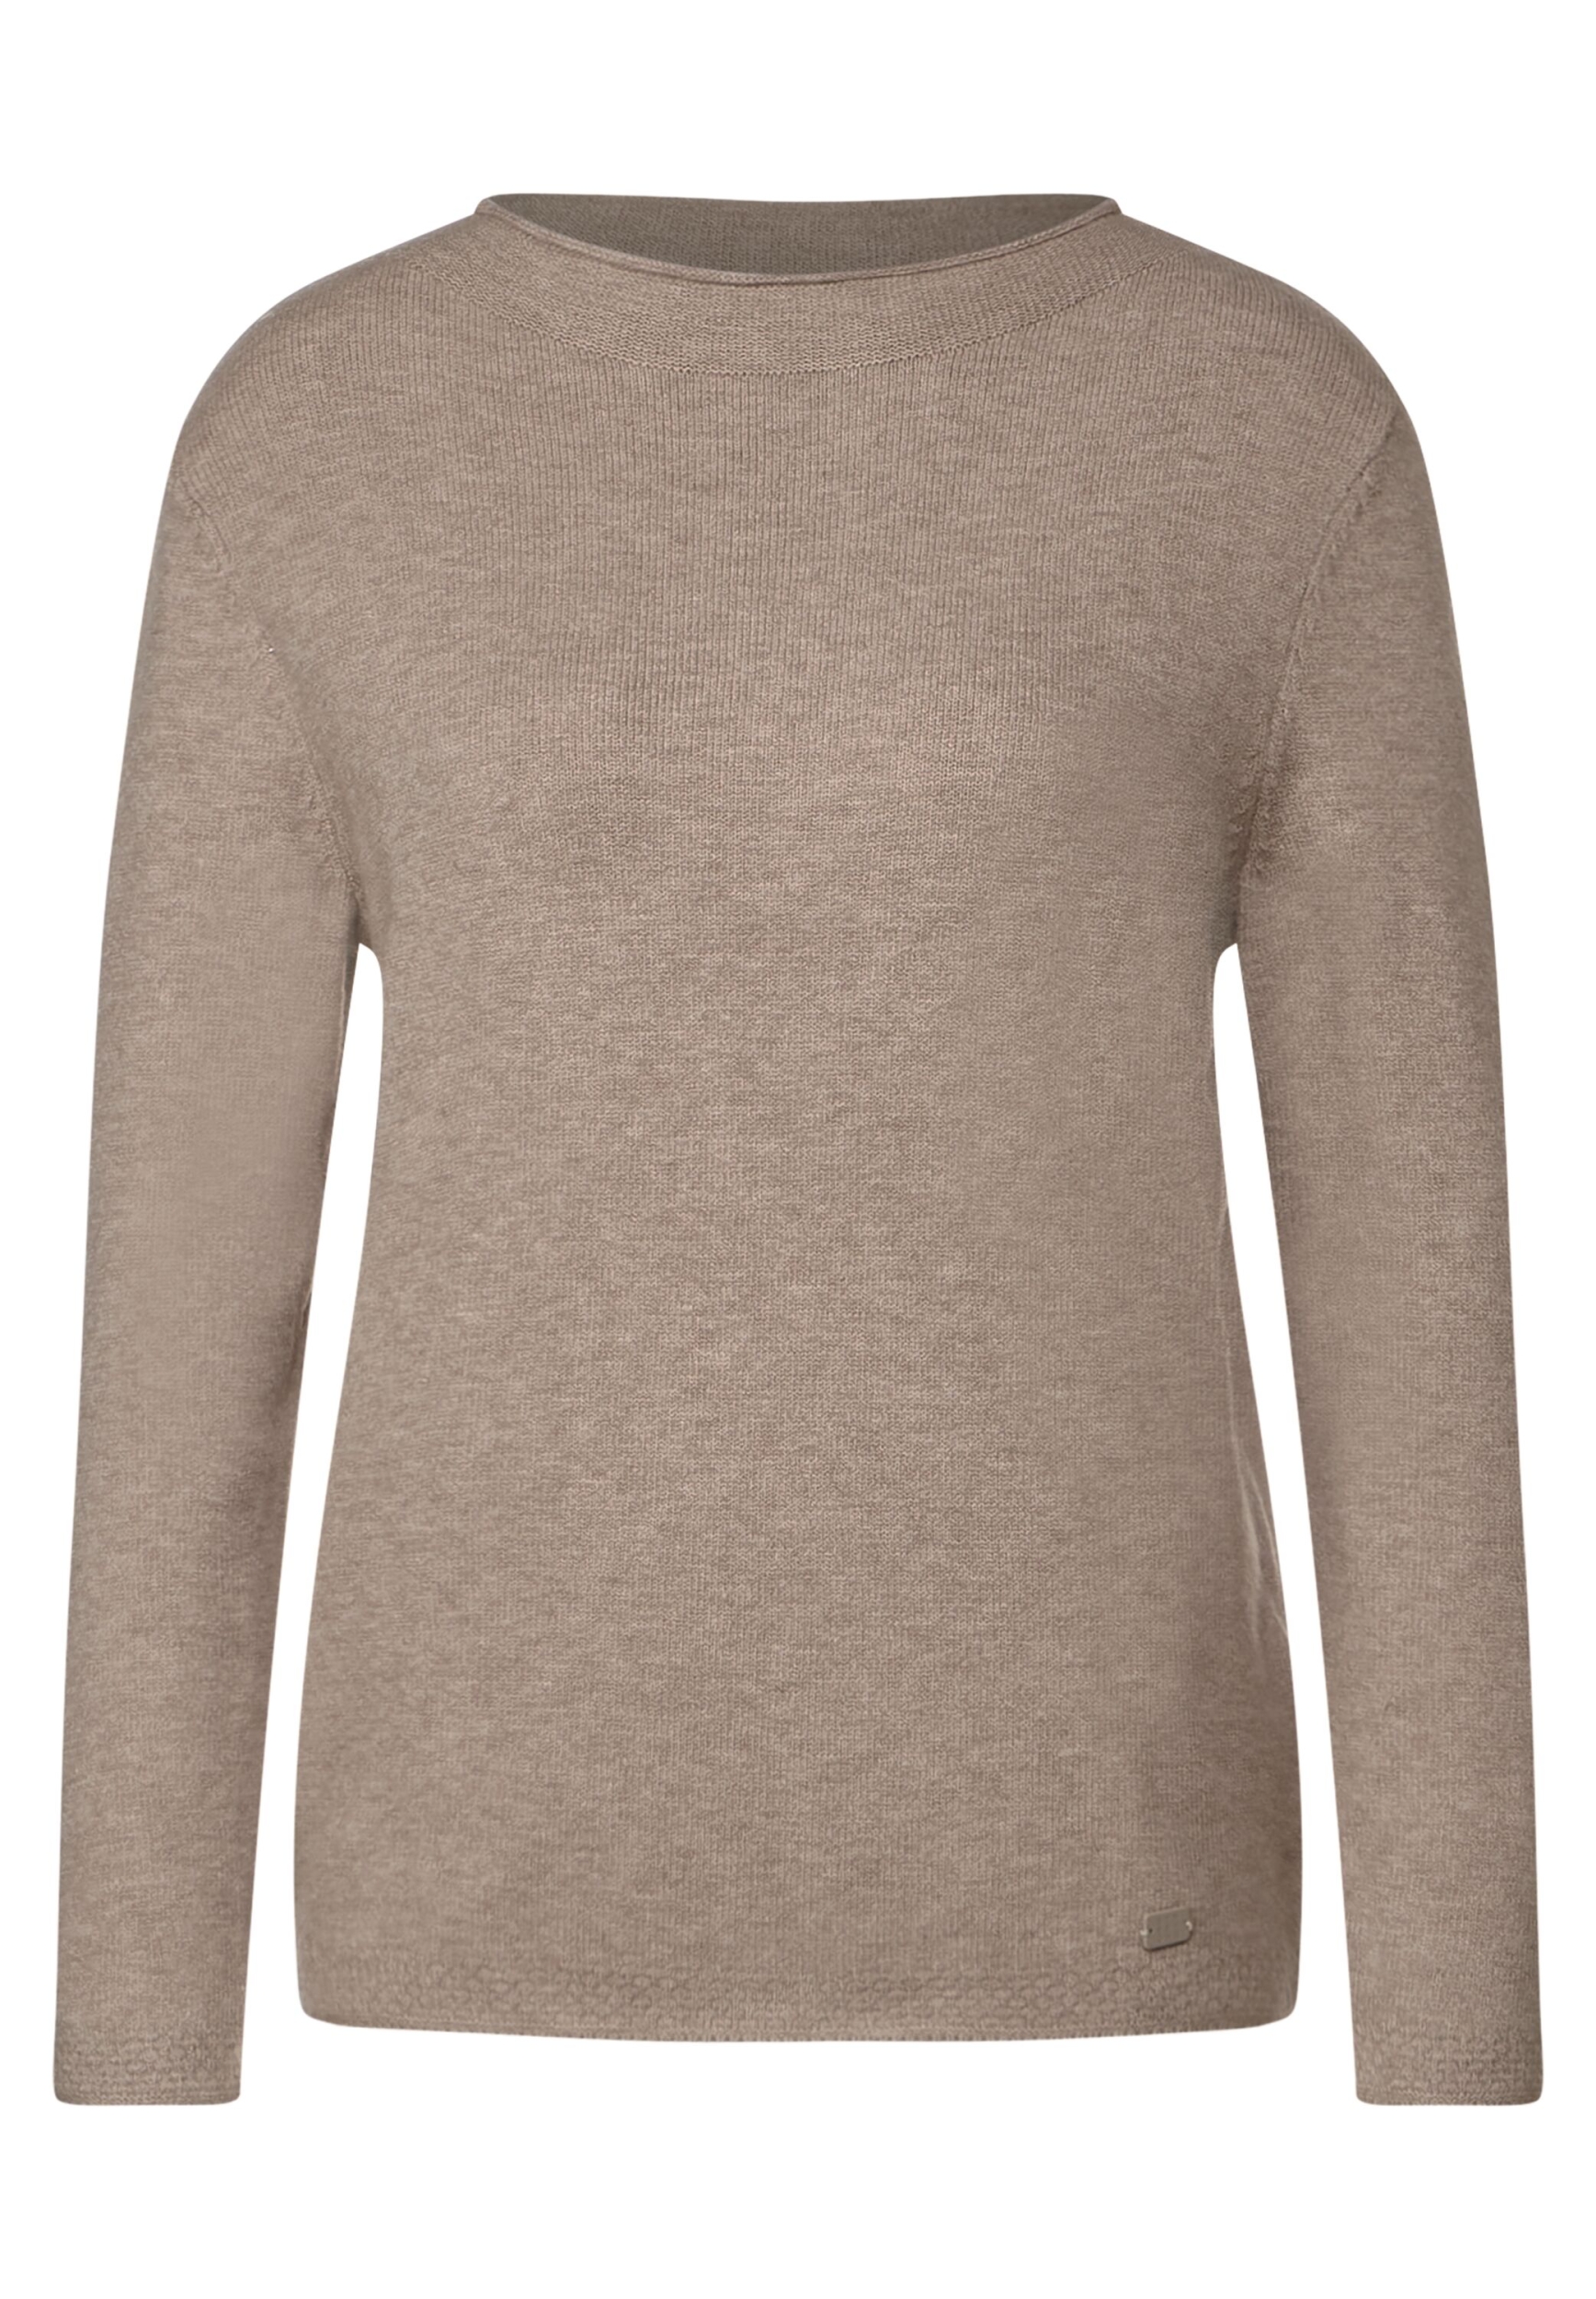 LTD QR basic lurex shirt | 40 | spring sand melange | A320678-15379-40